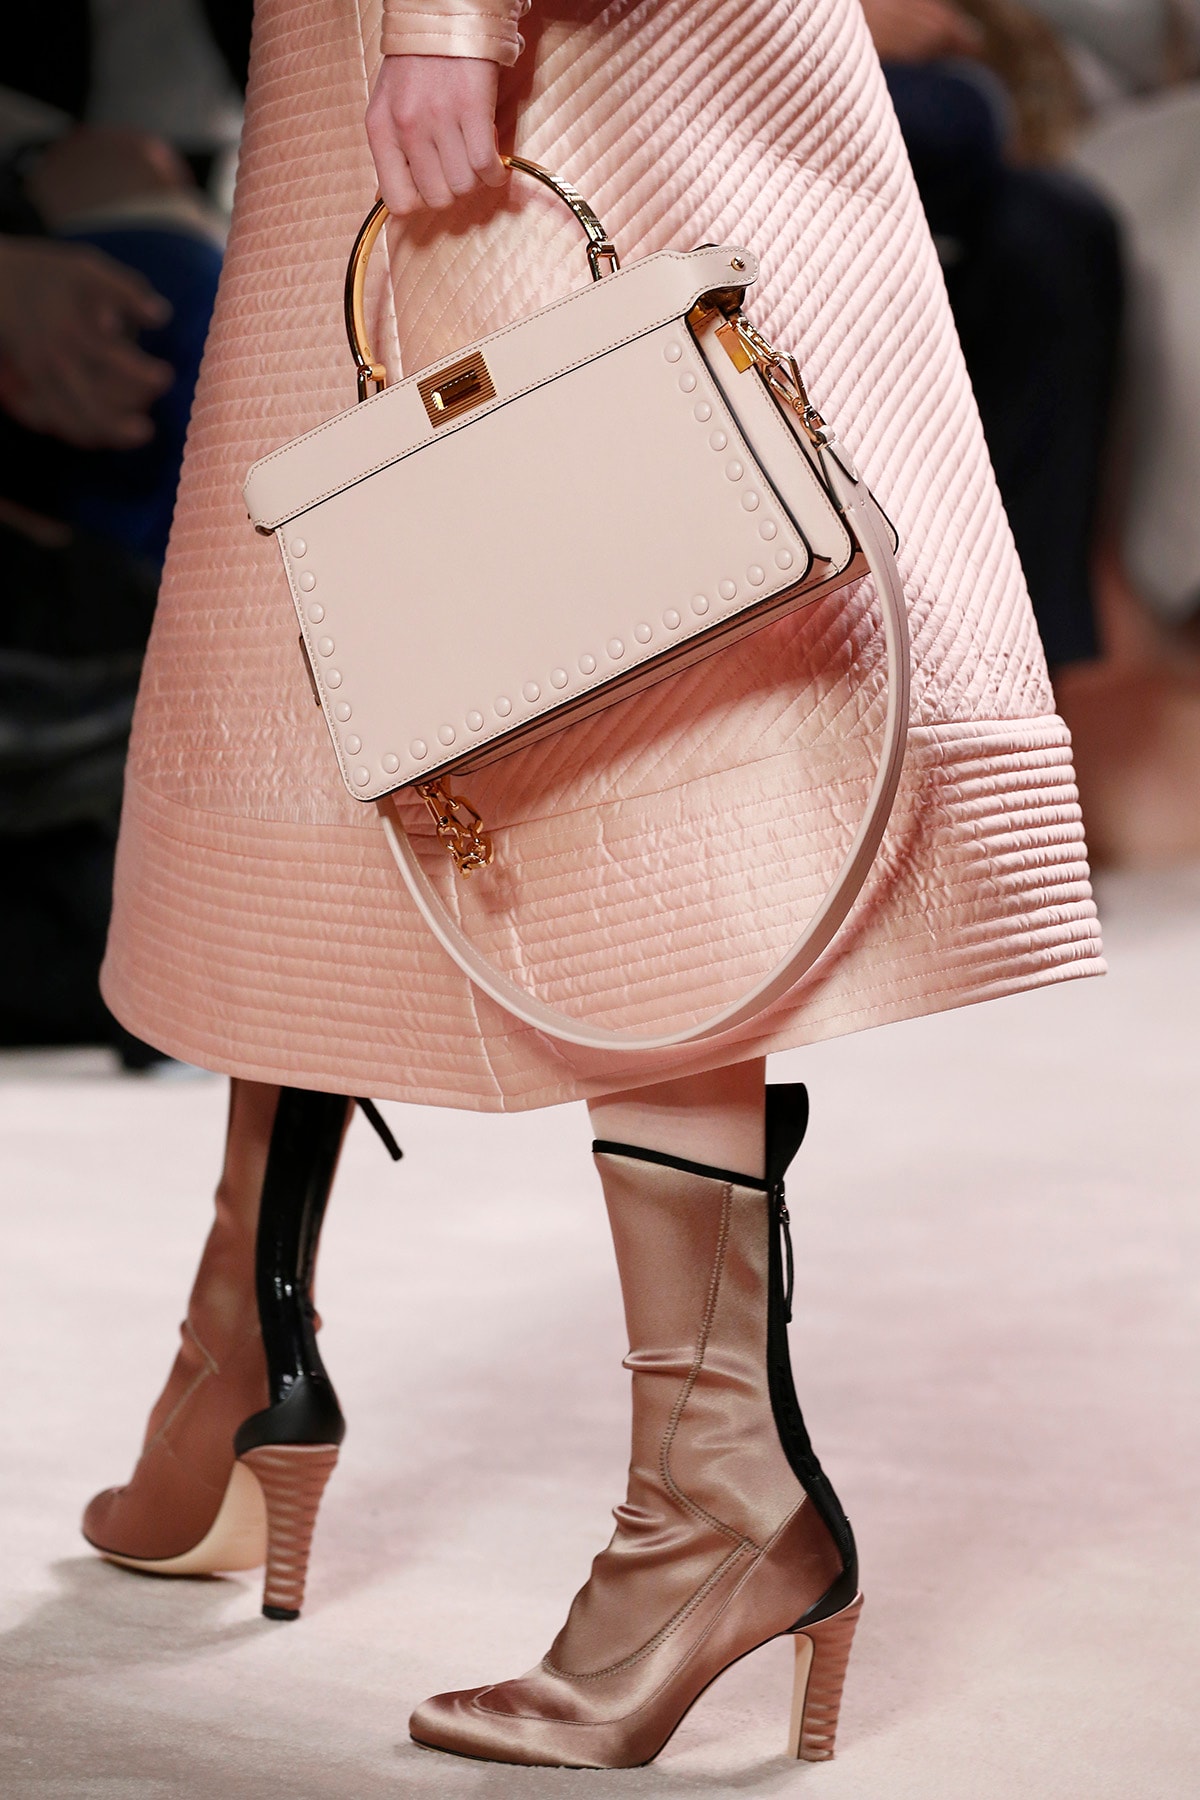 Fendi baguette  Fall handbags, Fall bags handbags, Fashion